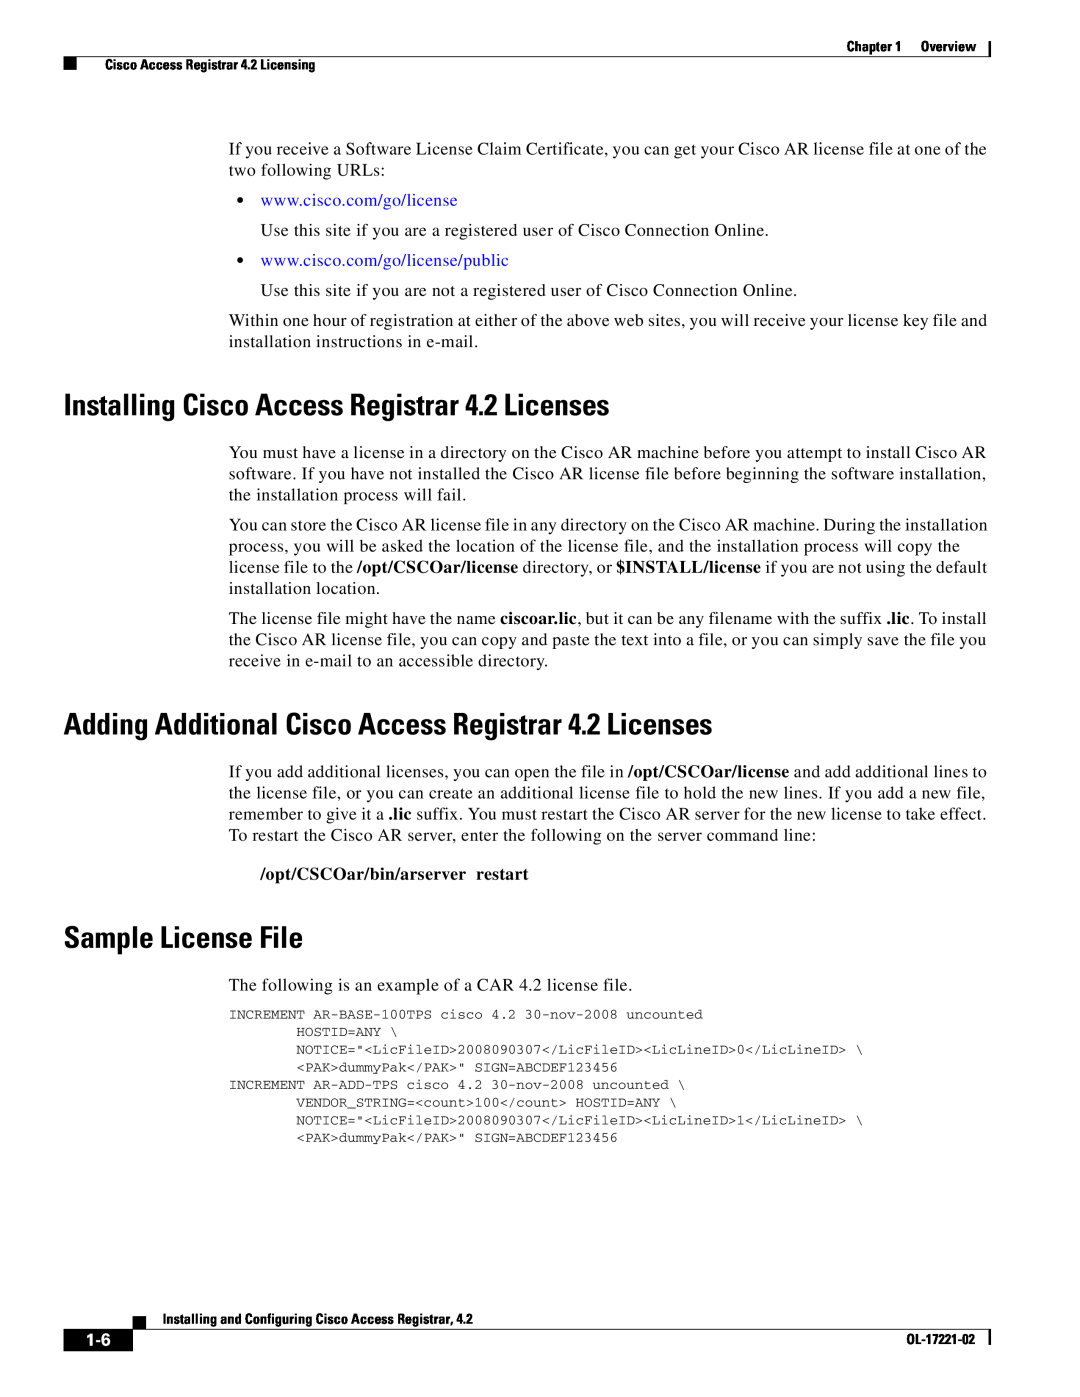 Cisco Systems Installing Cisco Access Registrar 4.2 Licenses, Adding Additional Cisco Access Registrar 4.2 Licenses 